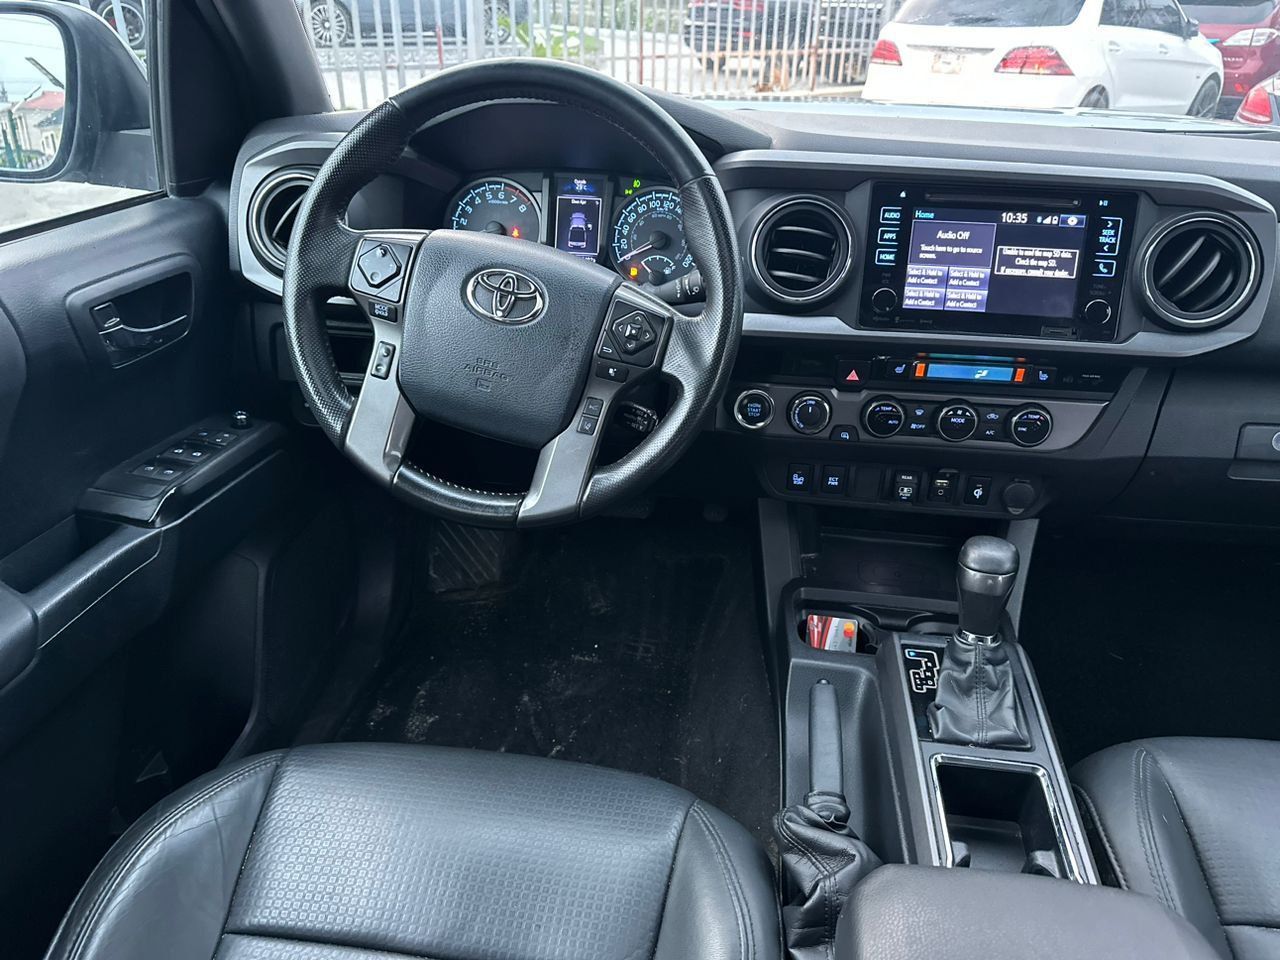 Toyota Tacoma 2018, Ikate, Lekki, Lagos, Vehicles